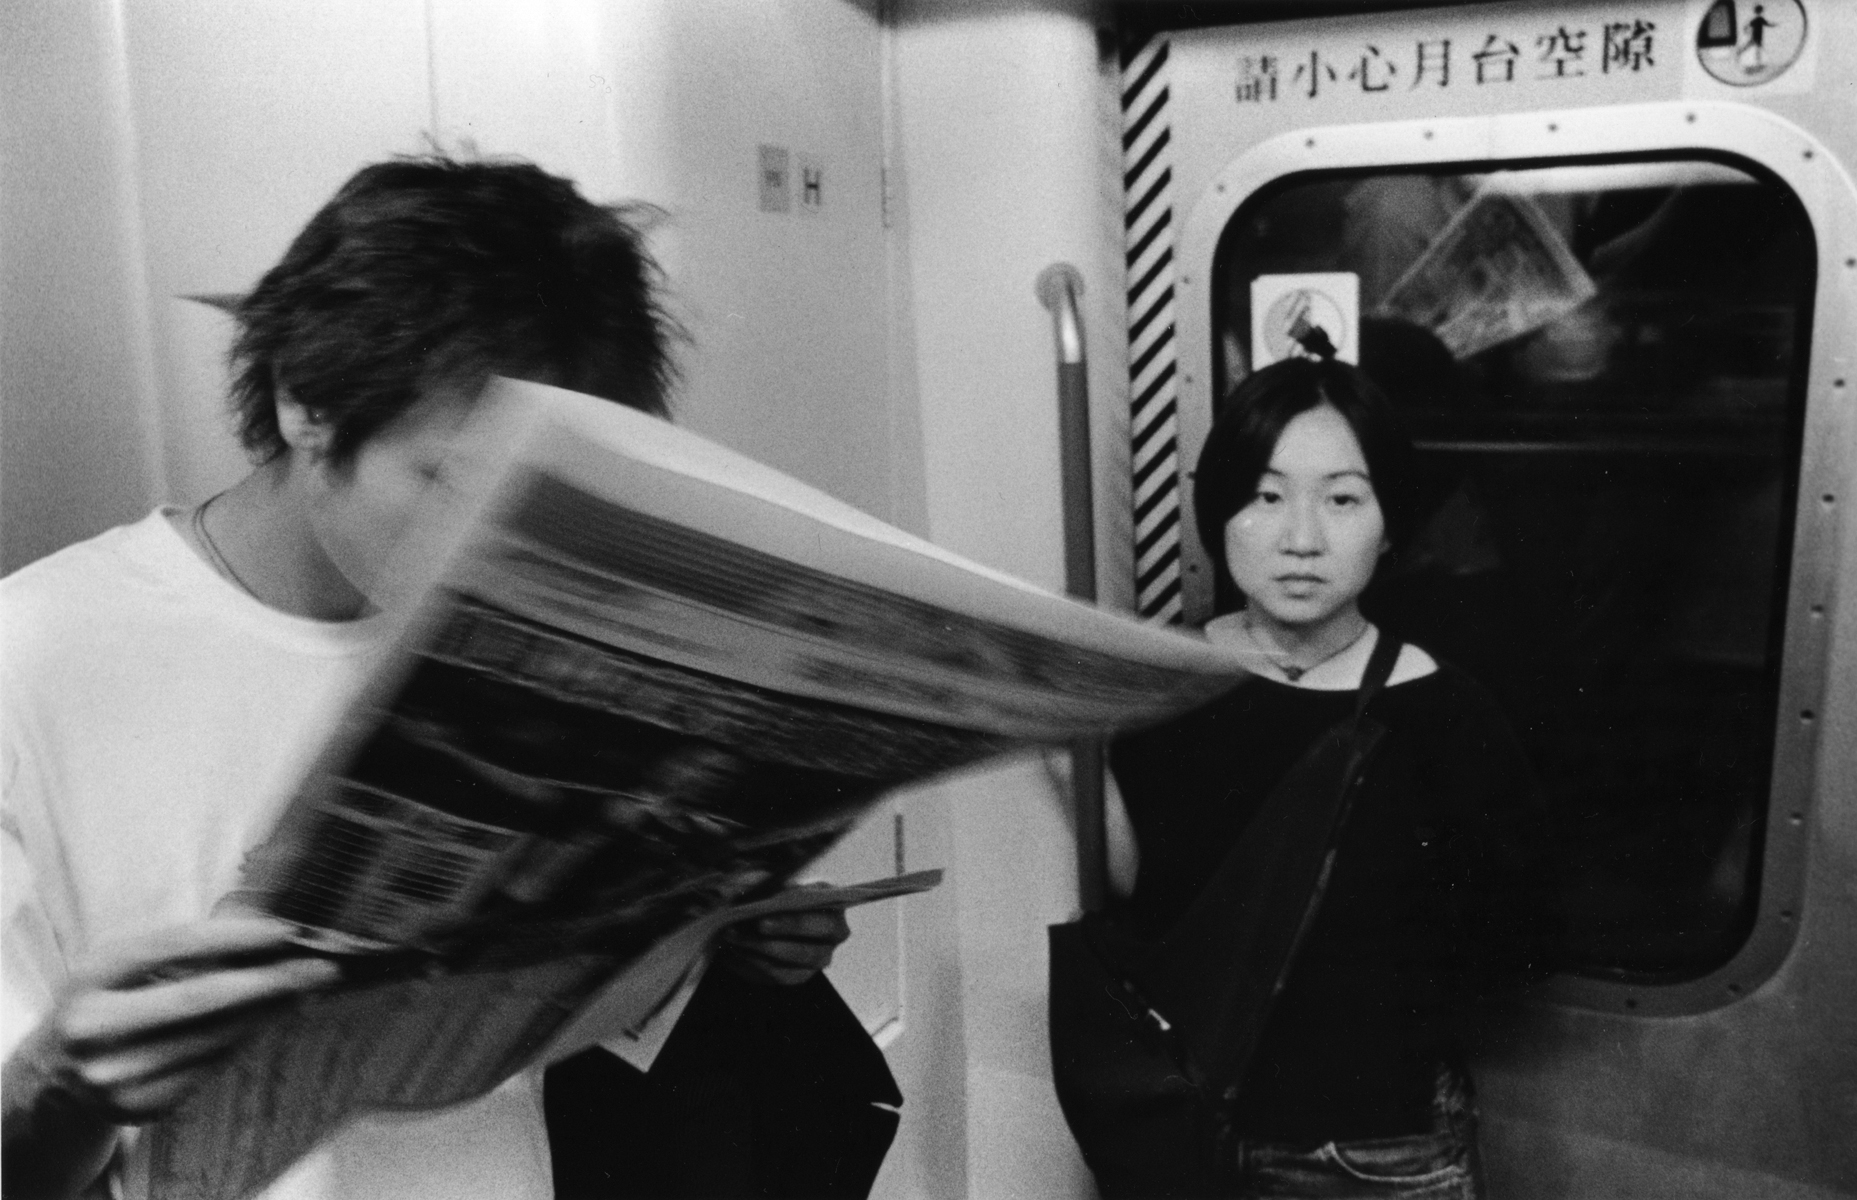 Chi Ying rides the subway home after a long day of work. Hong Kong Island